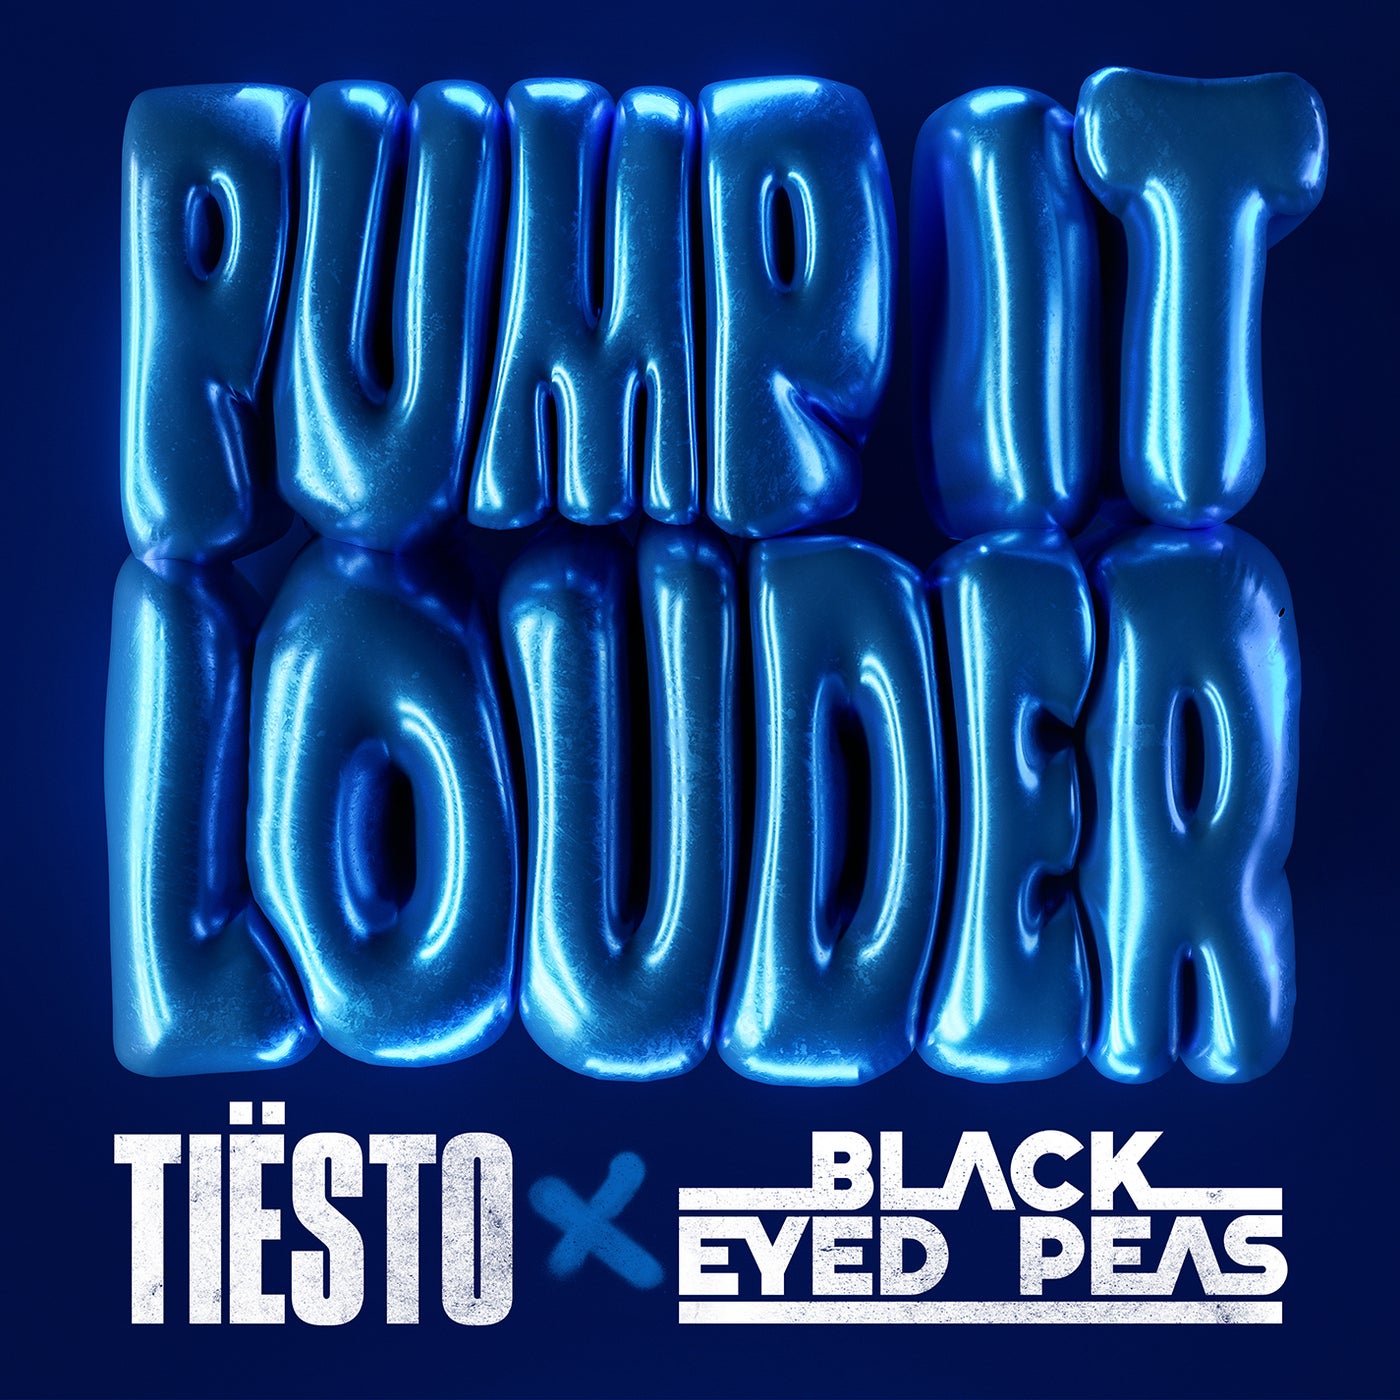 Pump It Louder (Extended Mix)